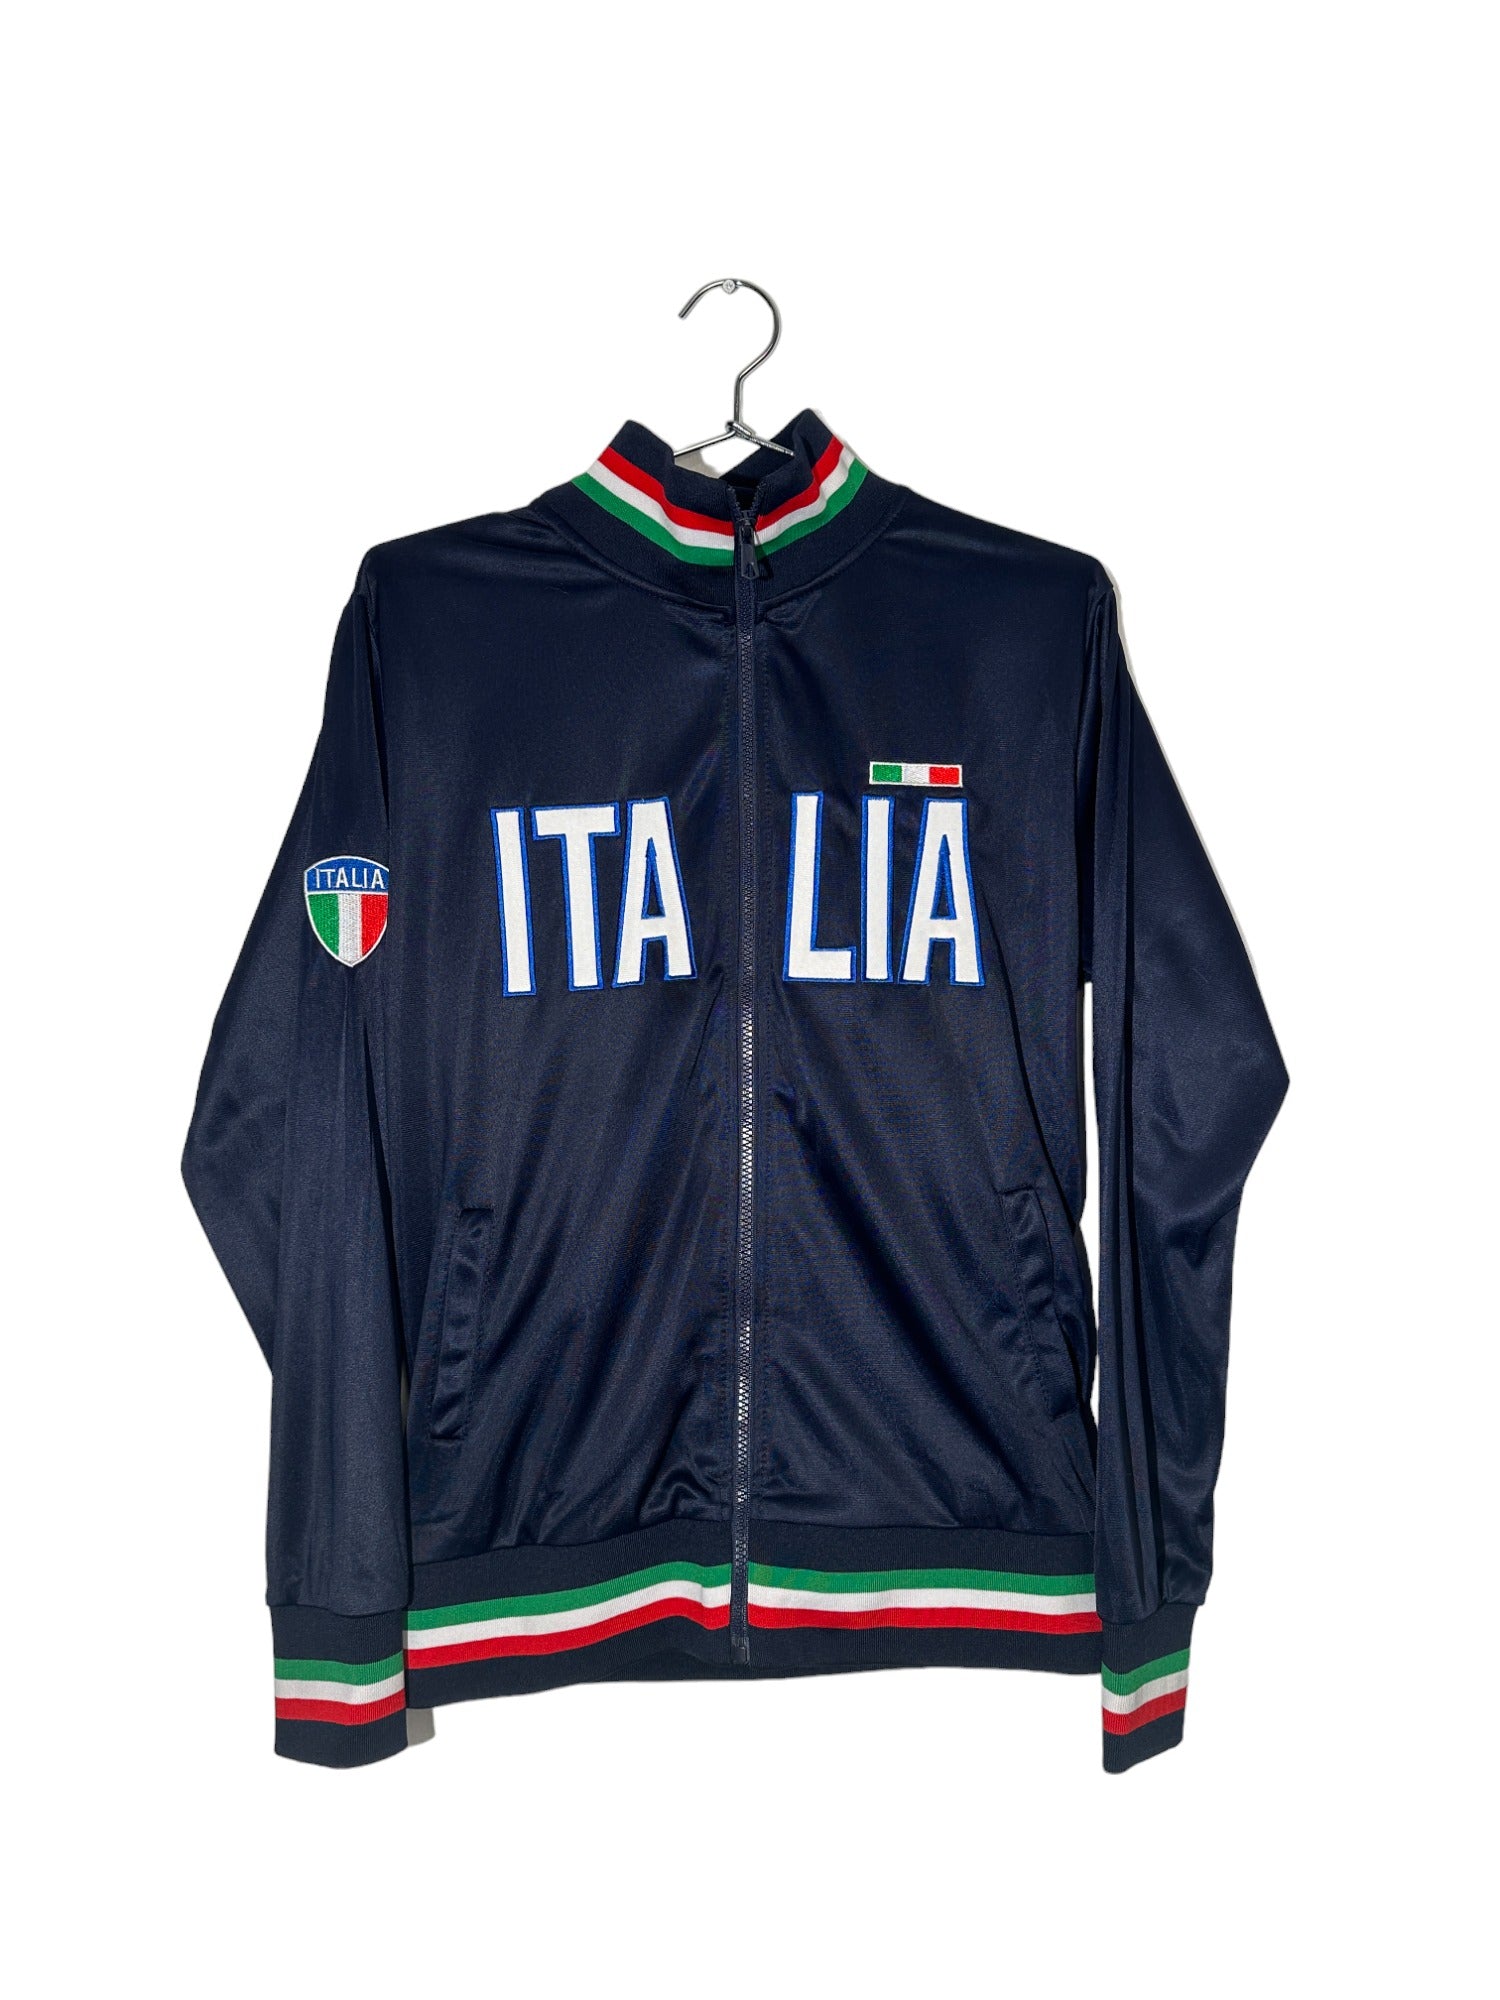 Blue "Italia" Zip Up Jacket